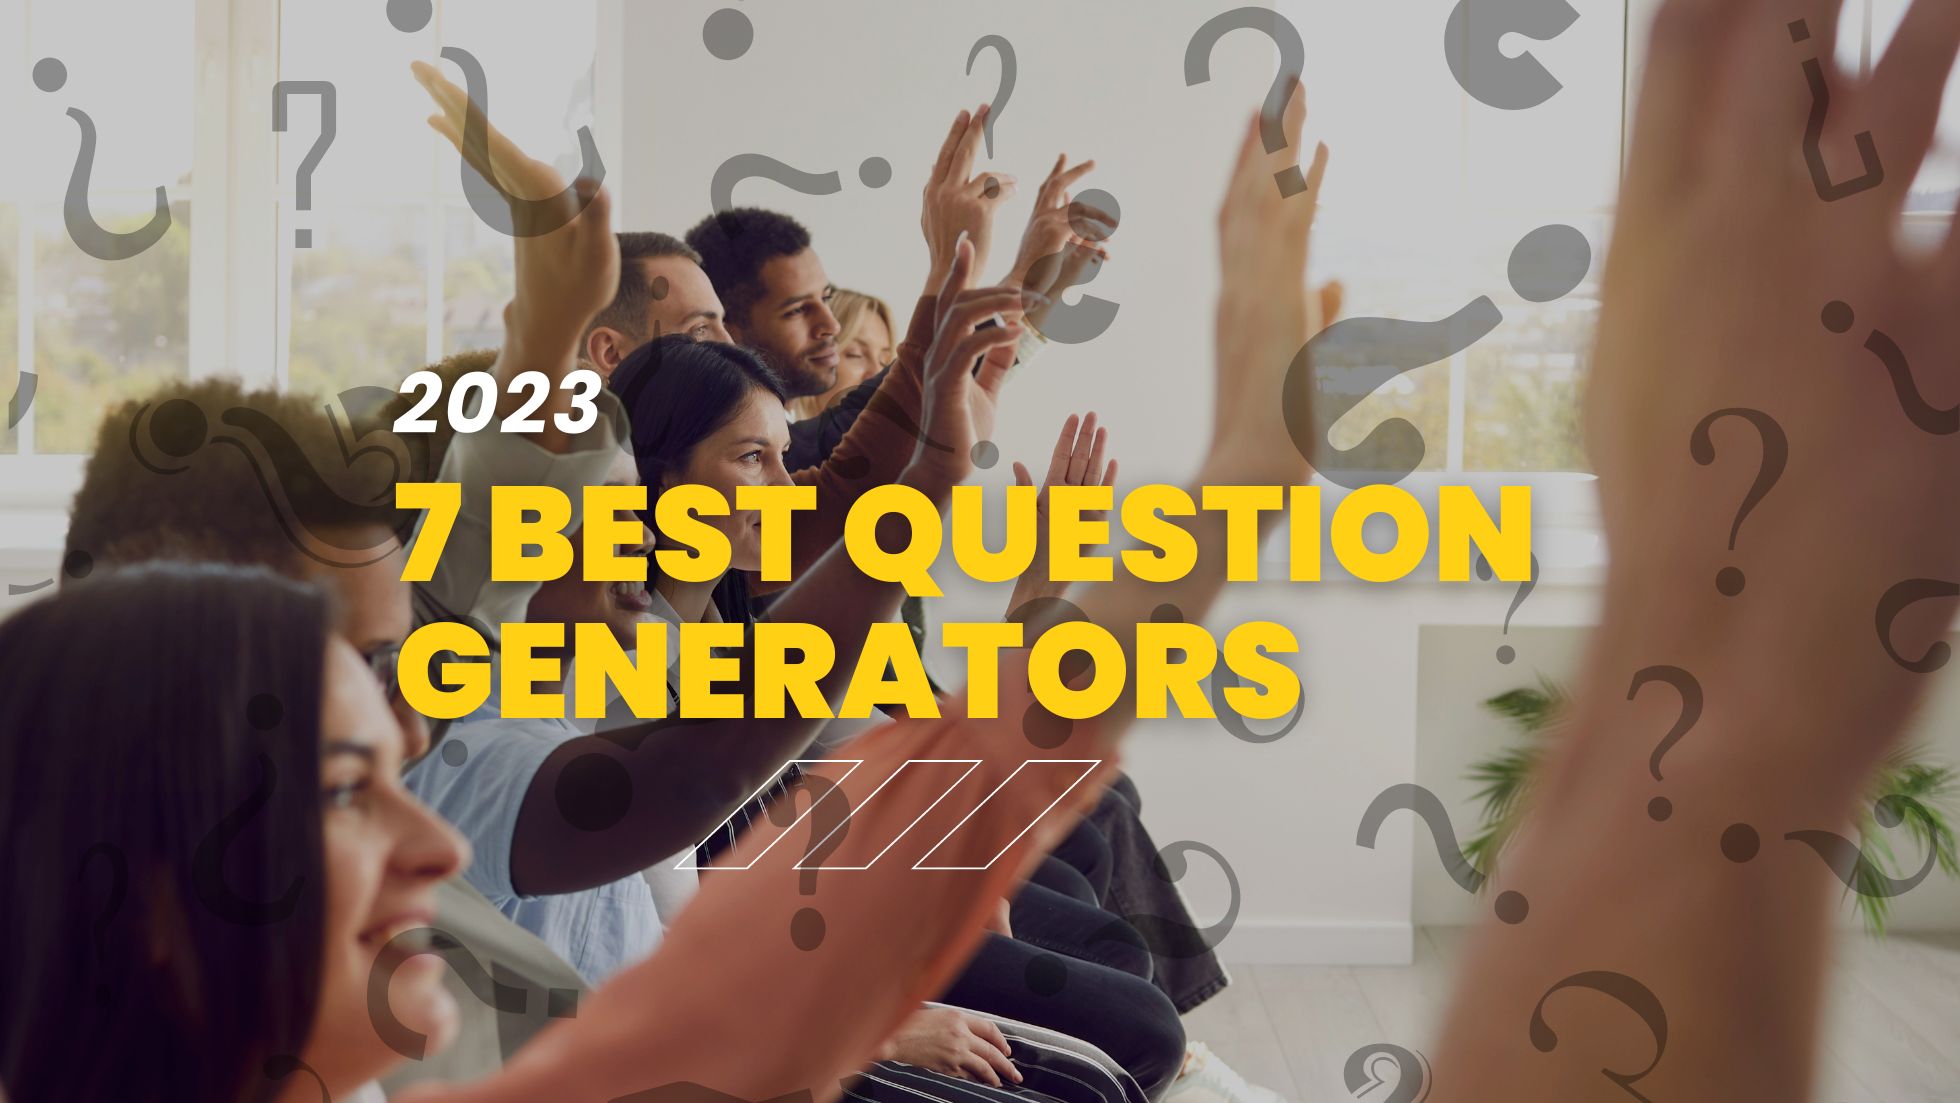 7 Best Question Generators for Meetings